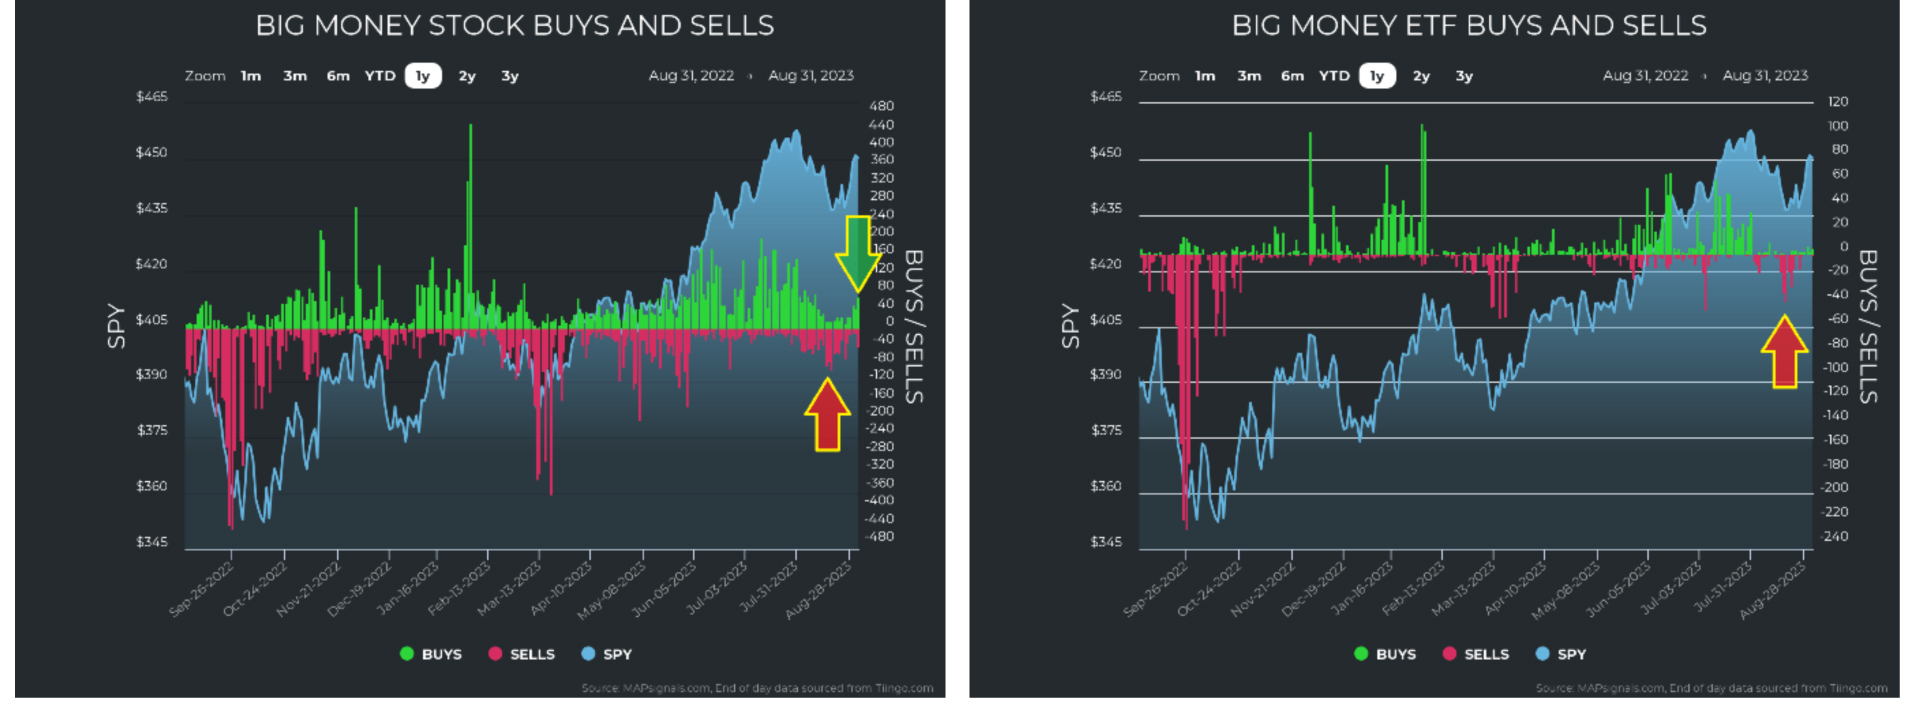 BMI Stock ETF Charts